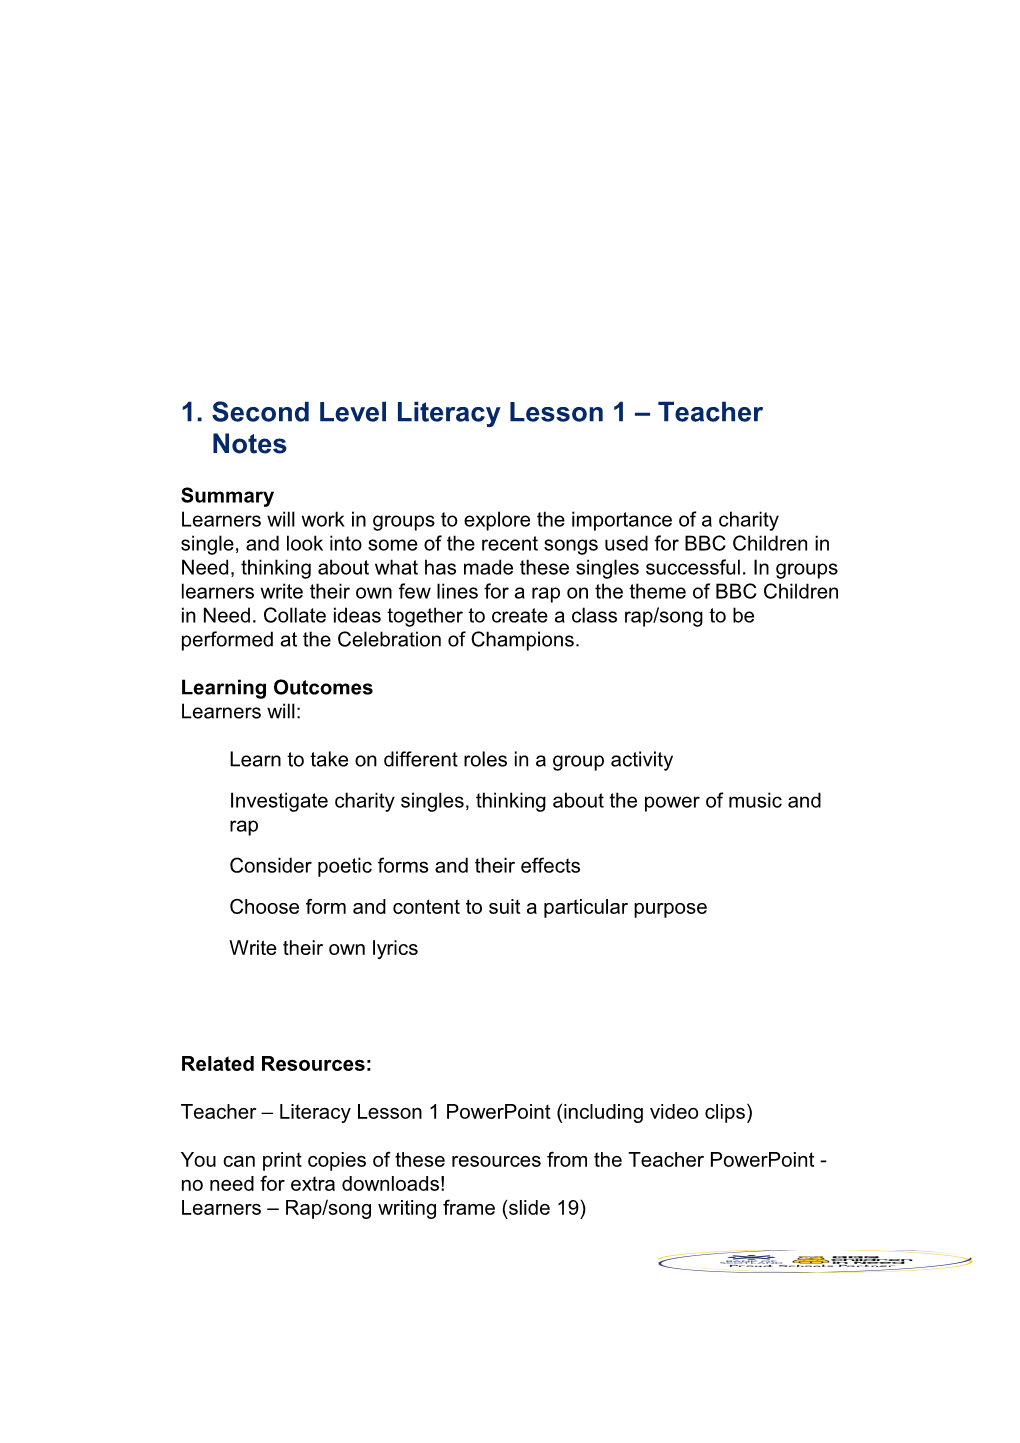 Second Level Literacy Lesson 1 Teacher Notes